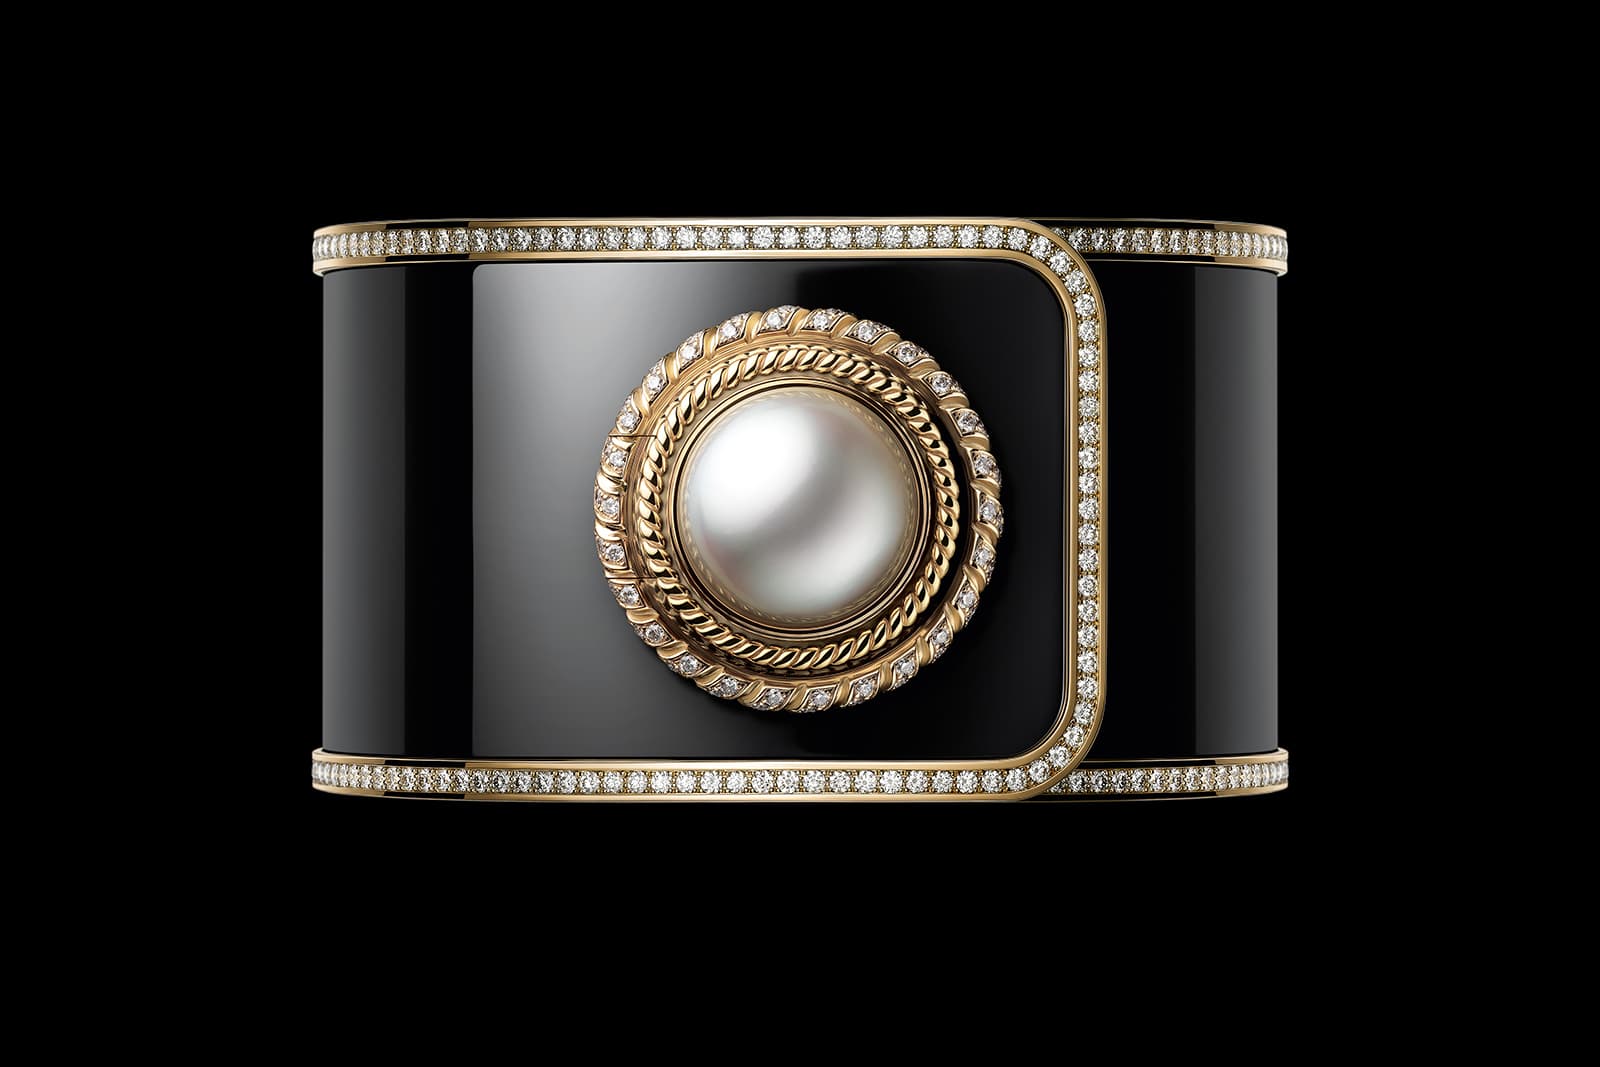 Opening the Australian pearl "button" reveals the hidden watch dial